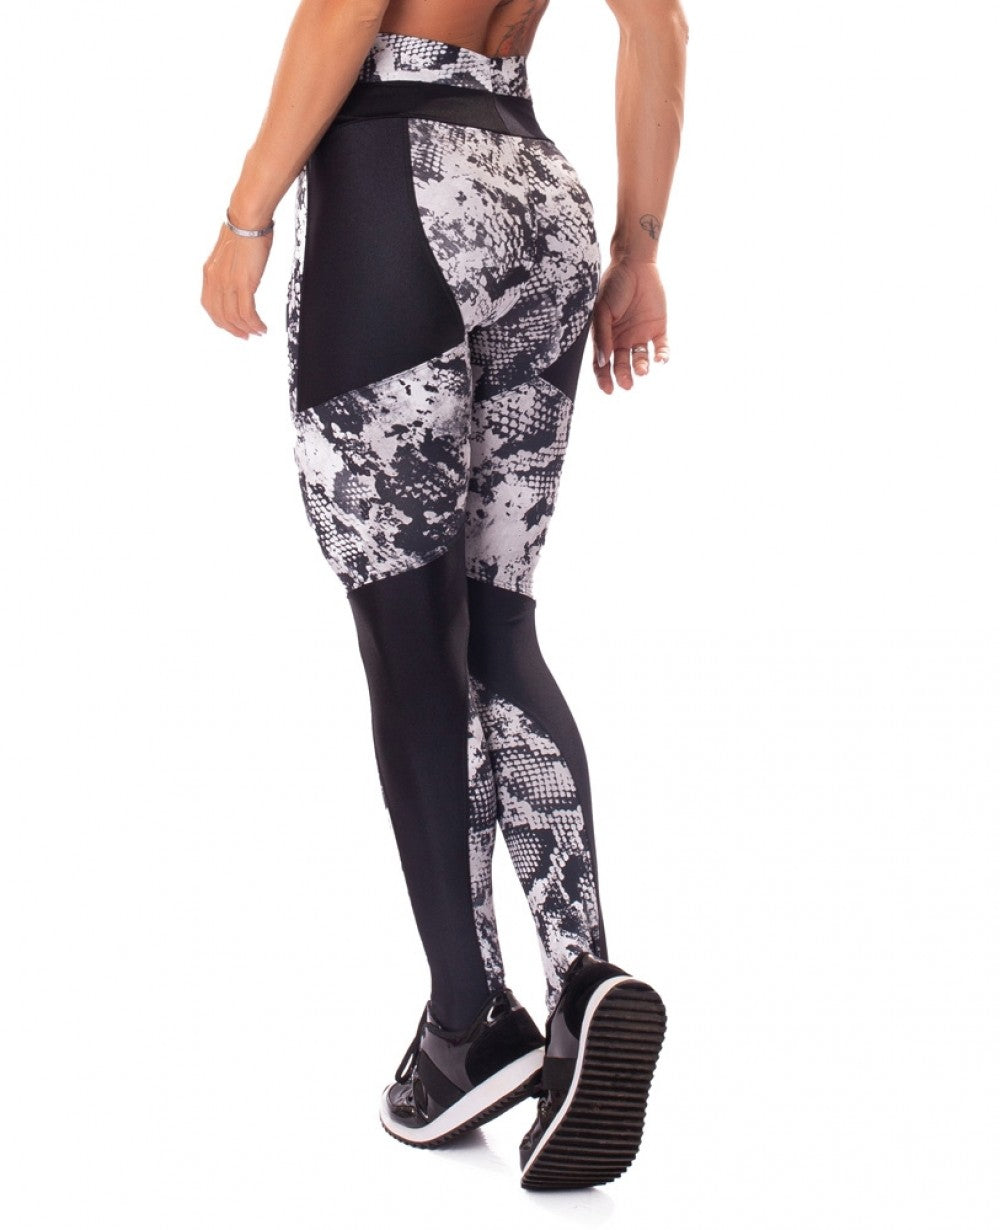 Let's Gym Brazilian Fashion Fitness Clothing Activewear Leggings Shiny Black